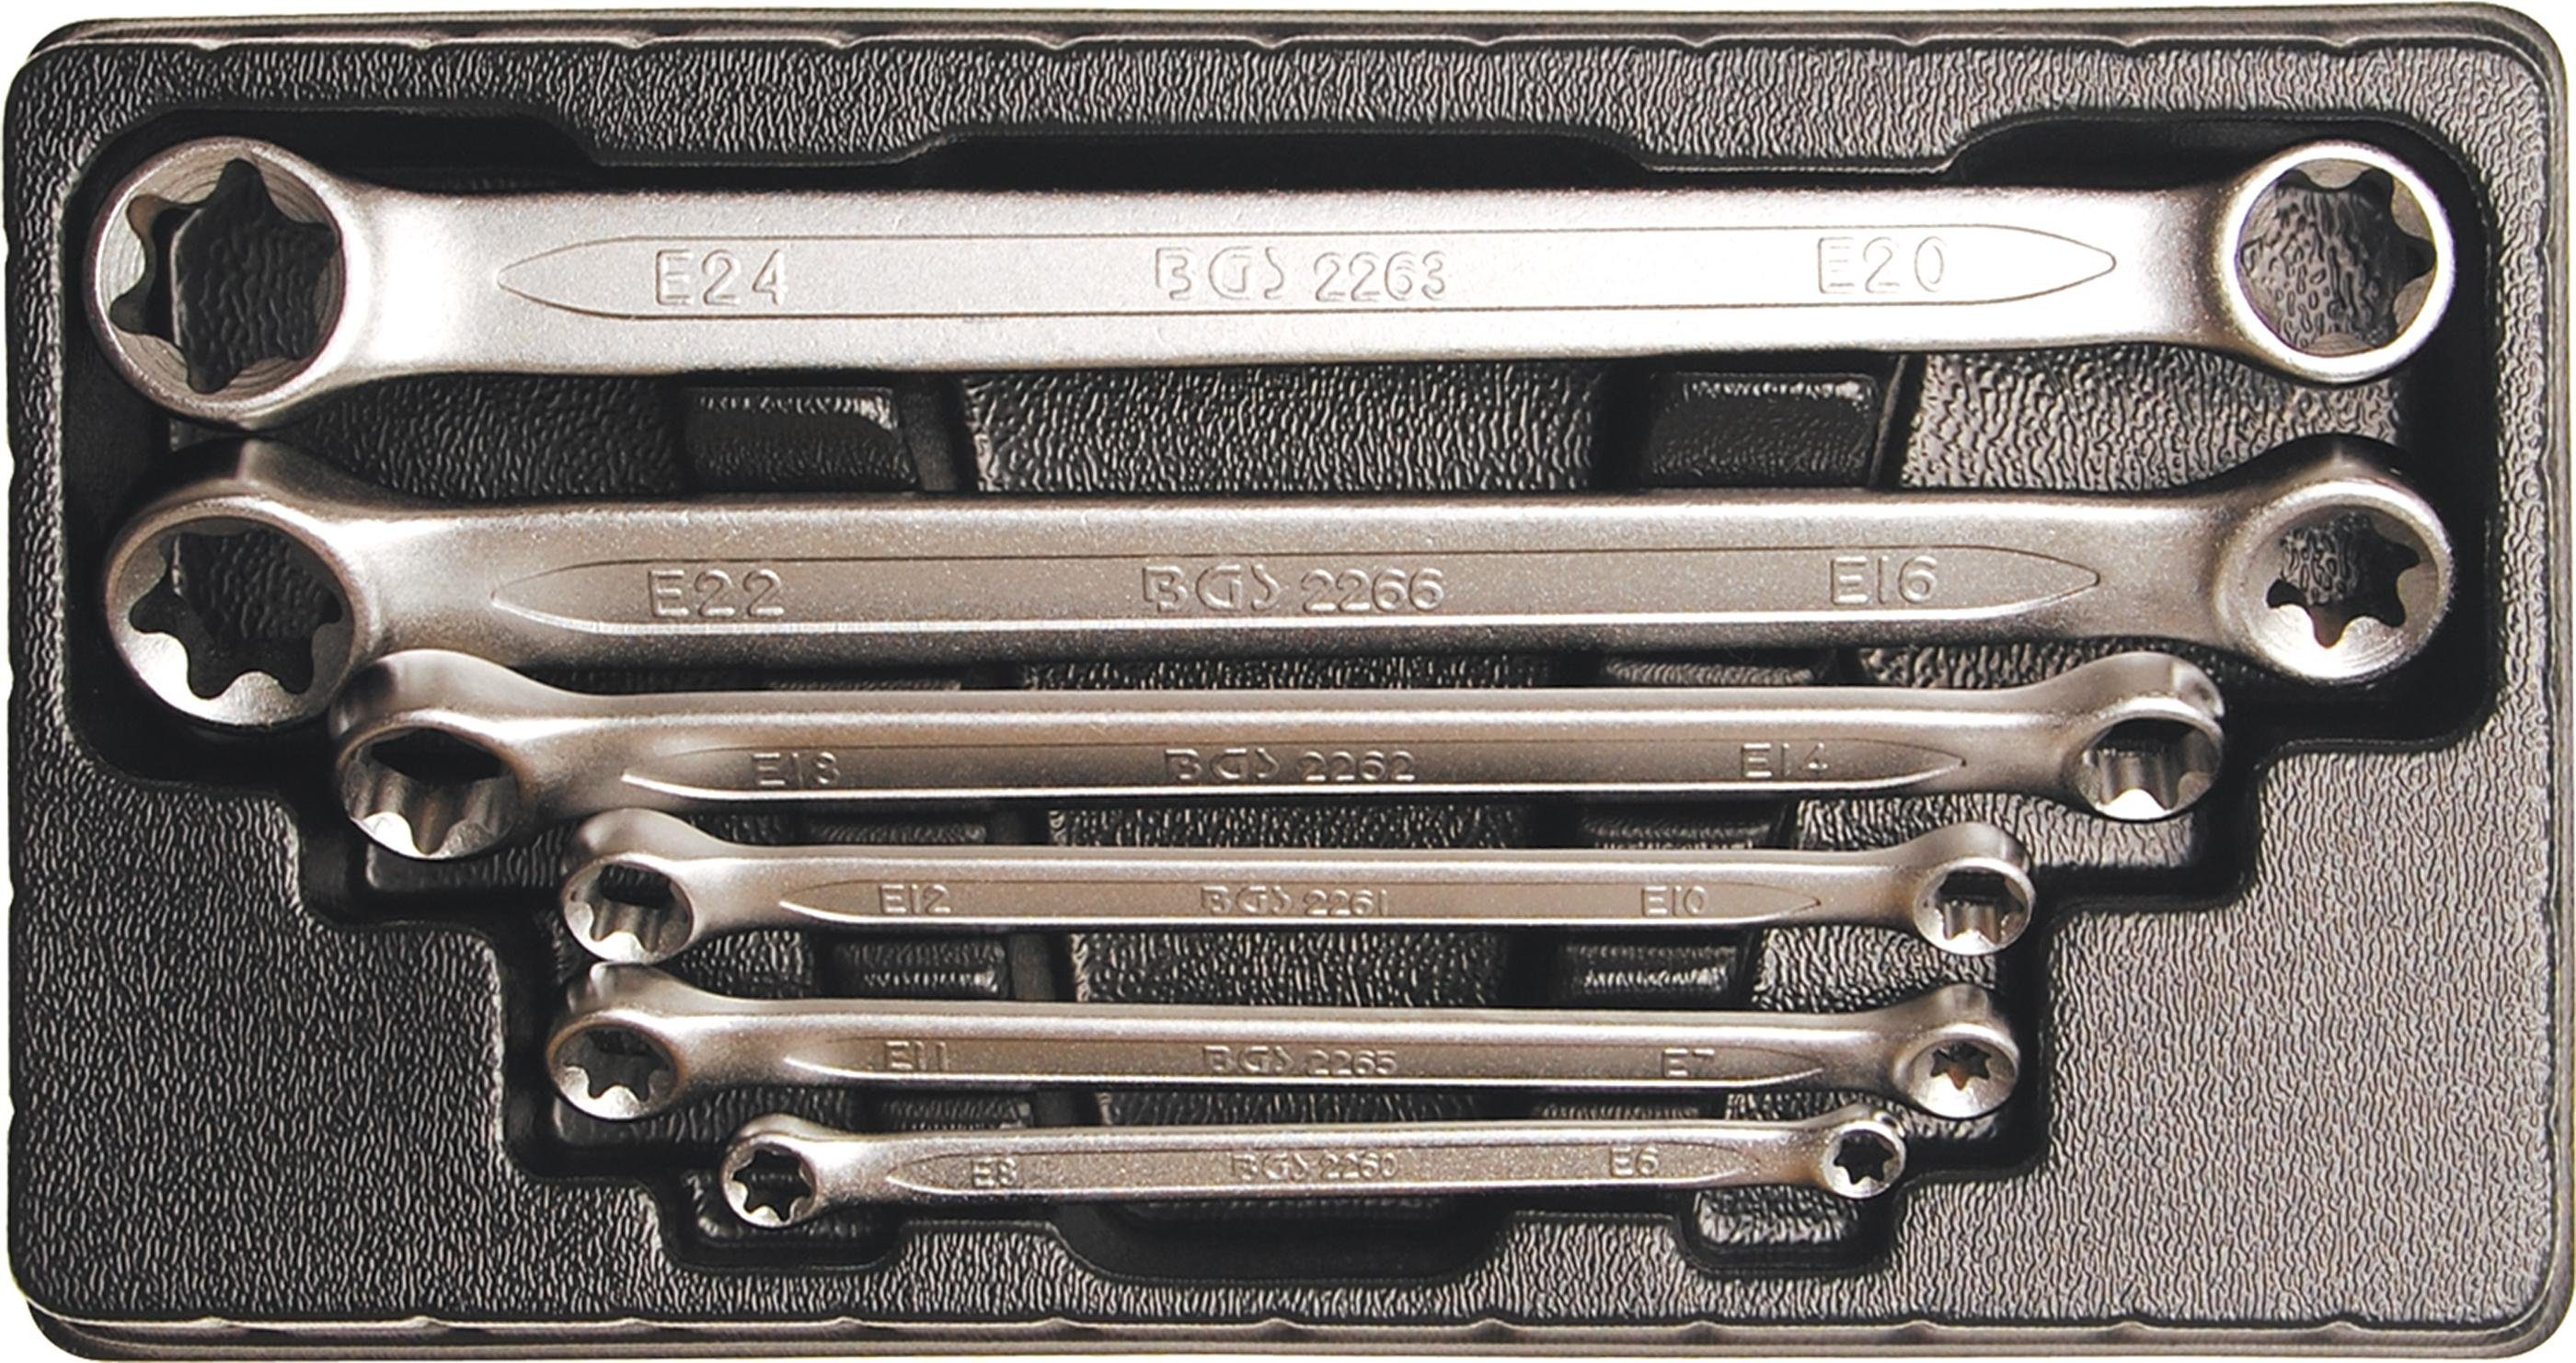 BGS technic Ratsche Doppel-Ringschlüssel-Satz mit E-Profil-Ringköpfen, SW E6 x E8 - E20 x E24, 6-tlg.